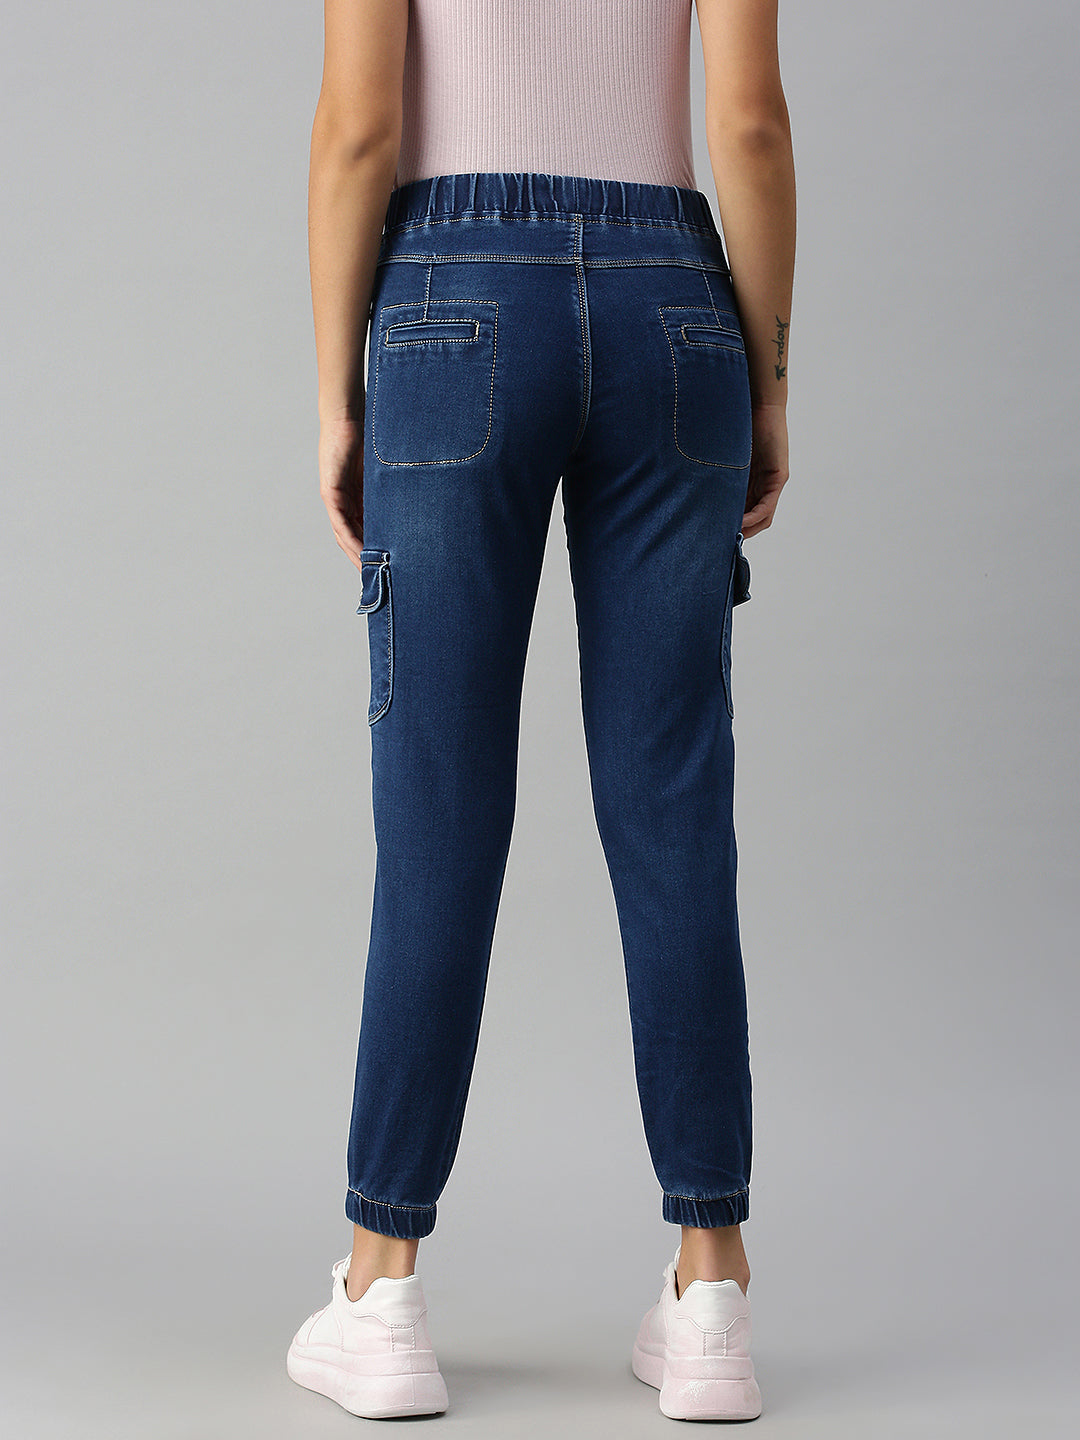 Women's Blue Solid Denim Jeans